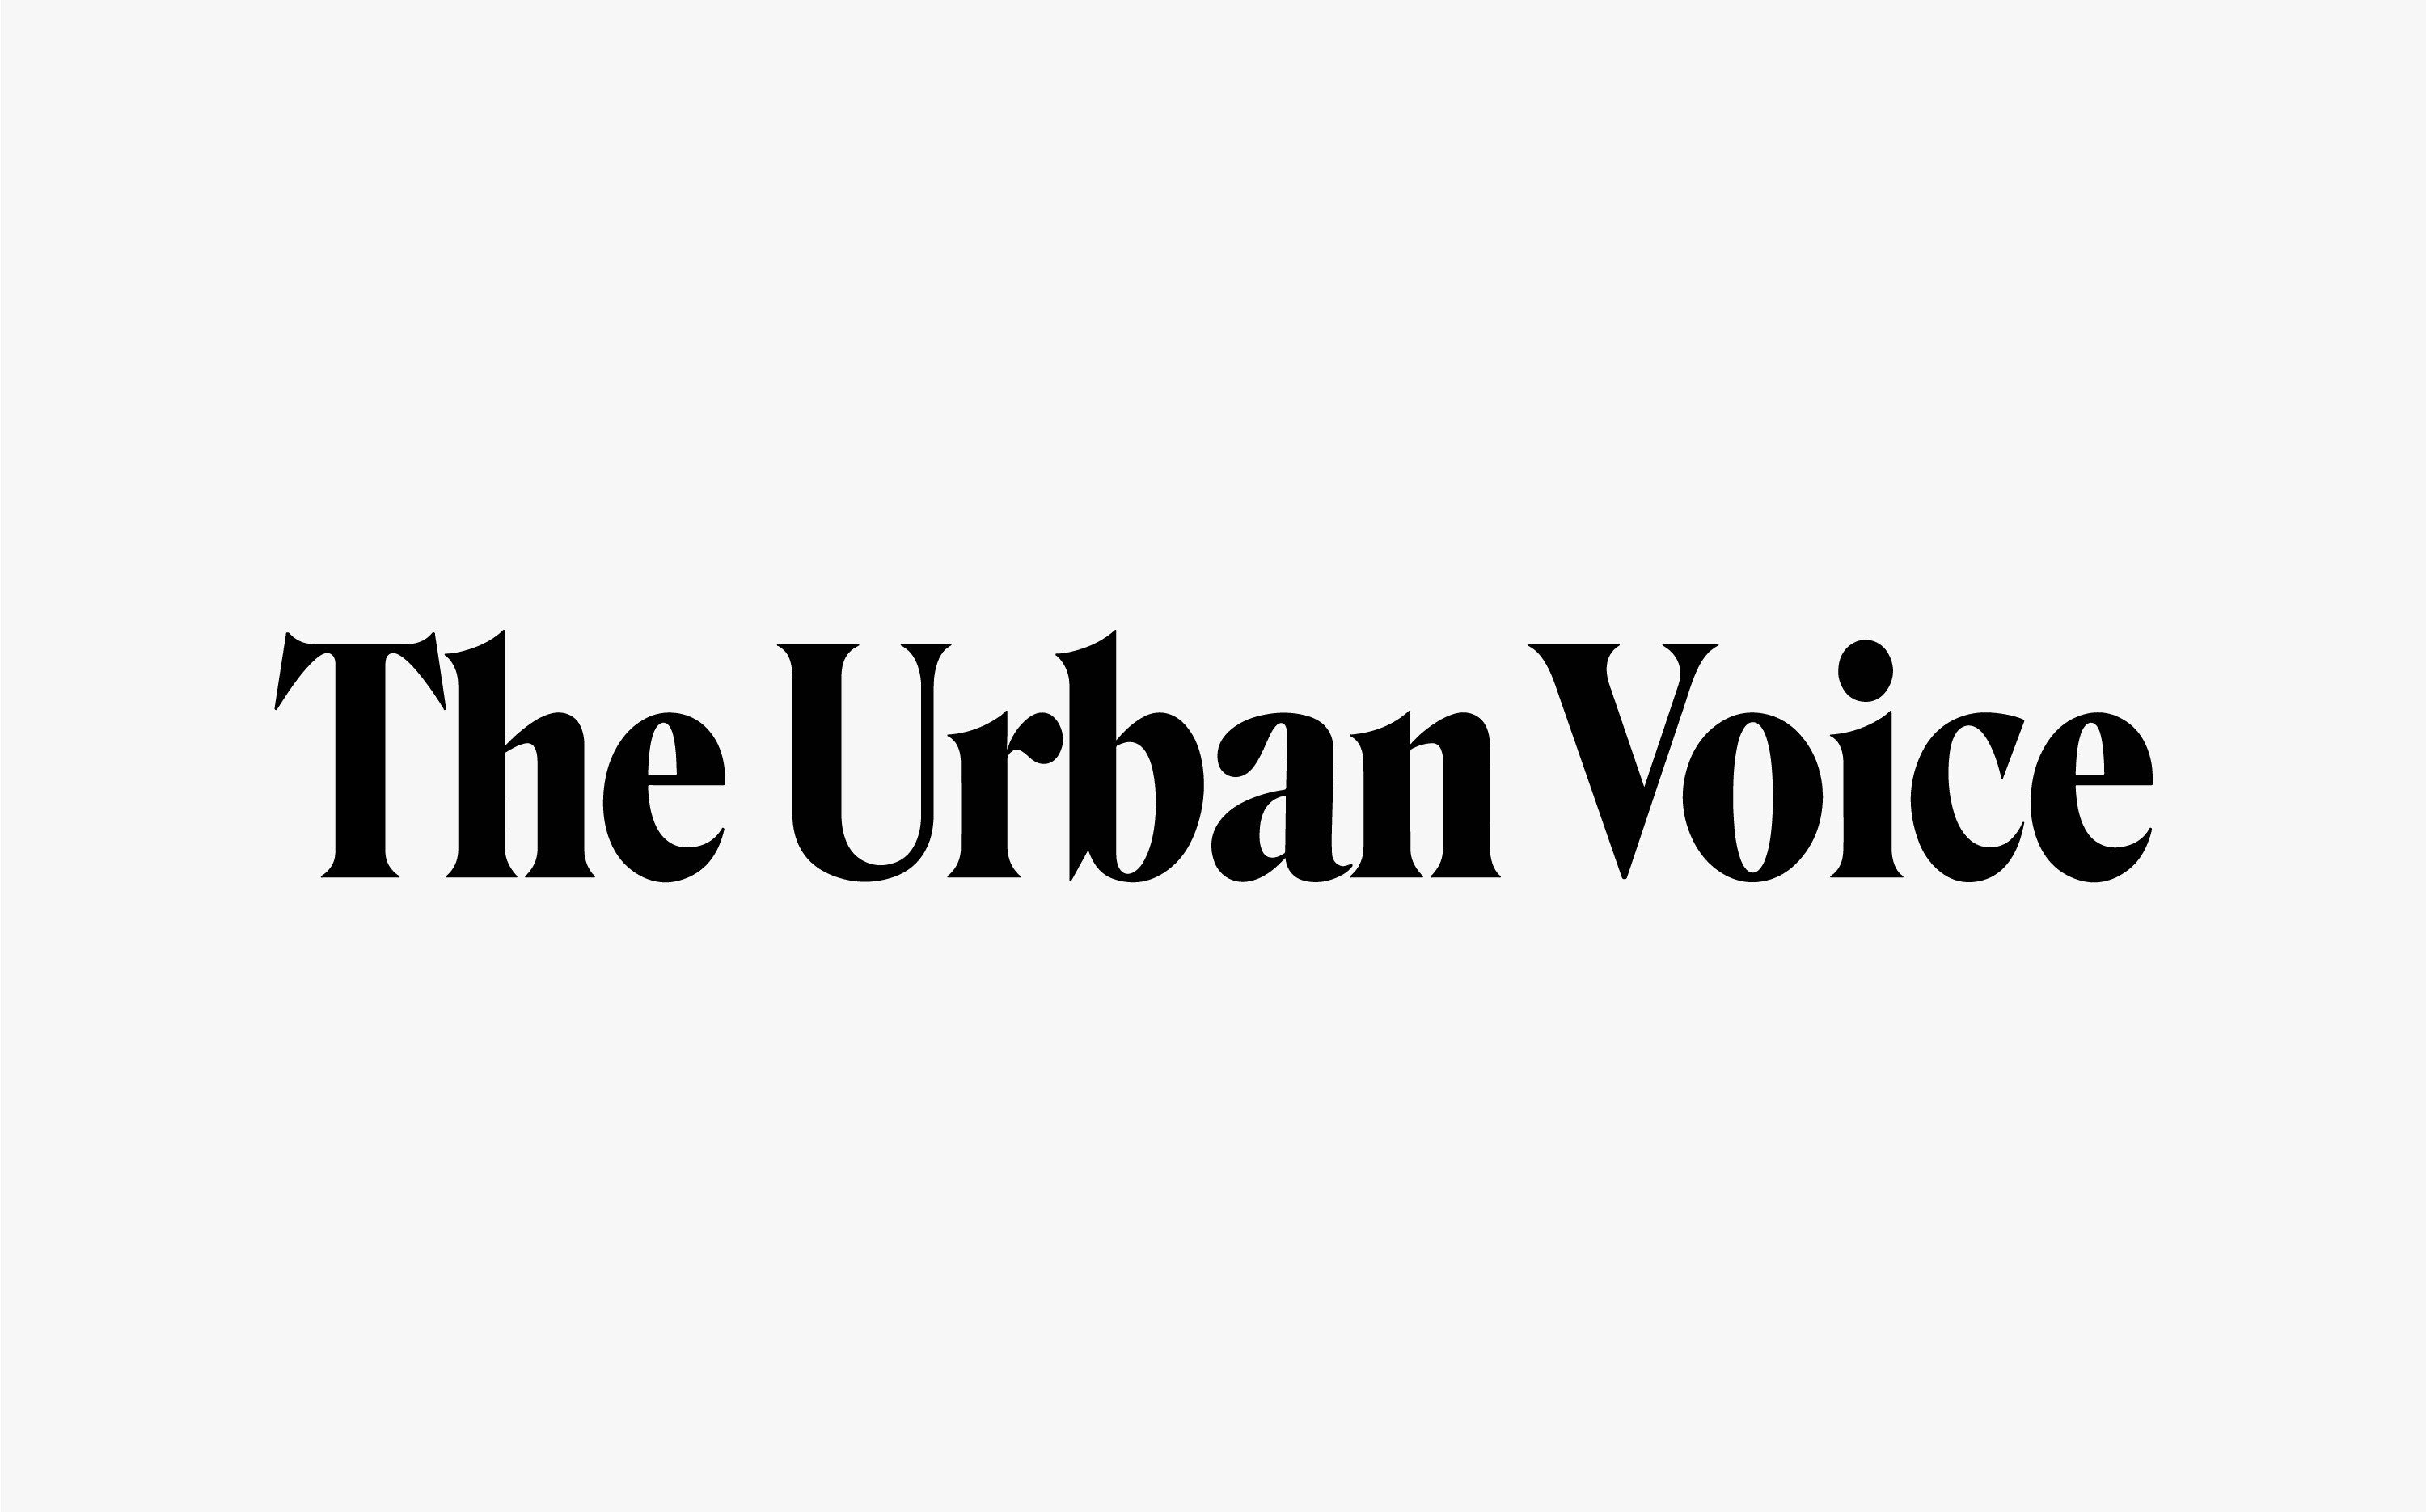 The Urban Voice logo